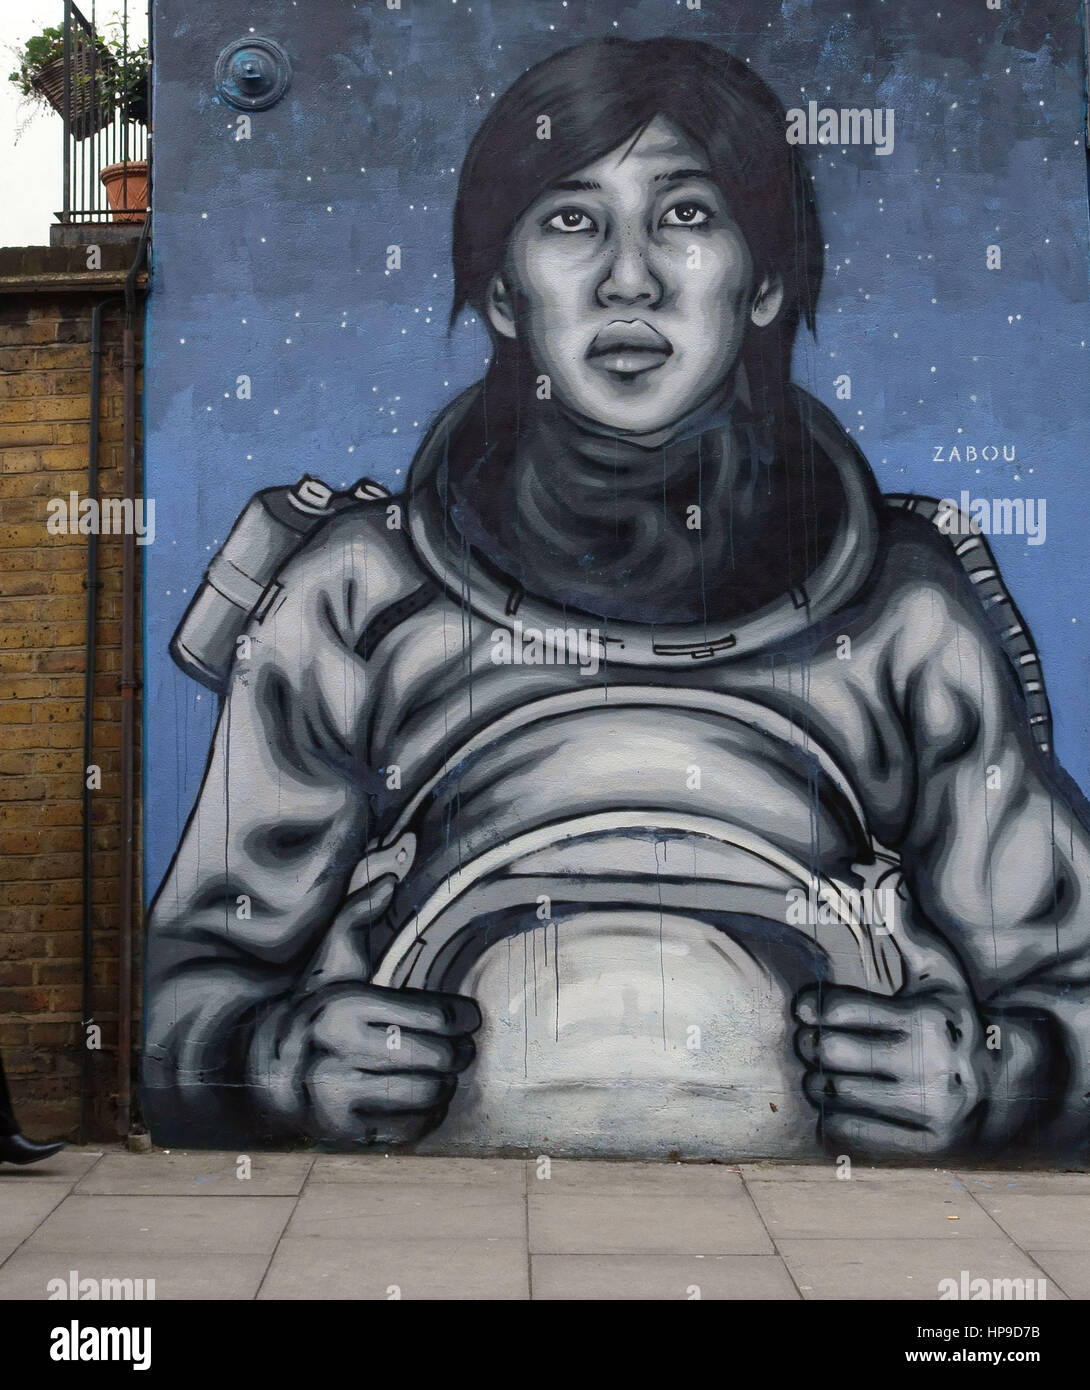 Graffito by Zabou in Islington, London Stock Photo